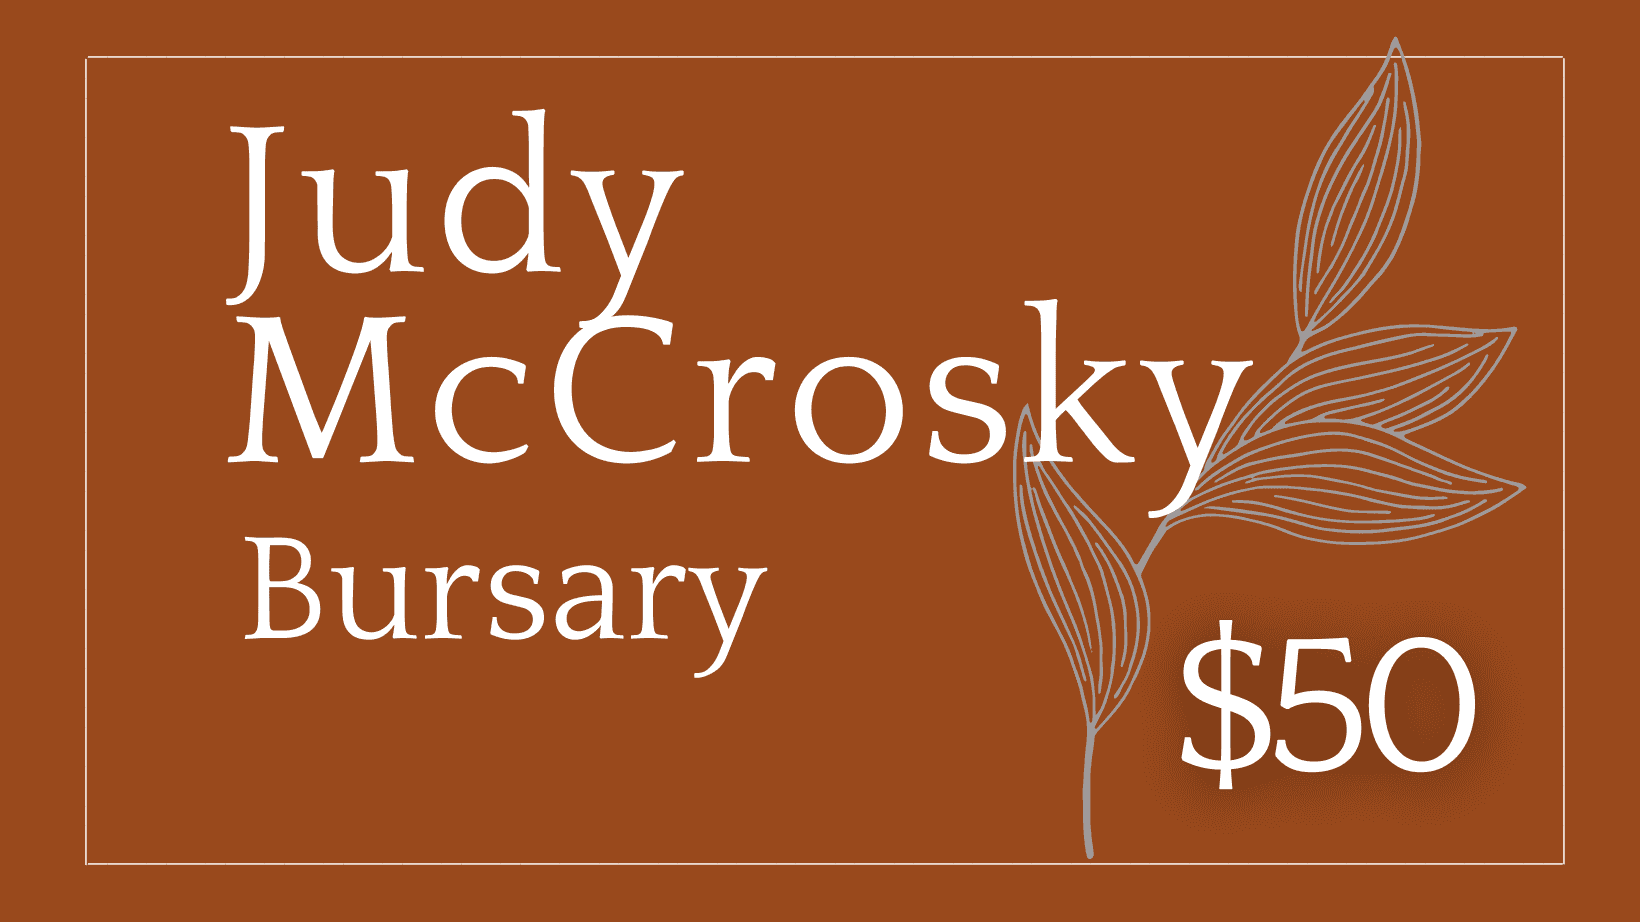 Judy McCrosky Bursary supporting image.